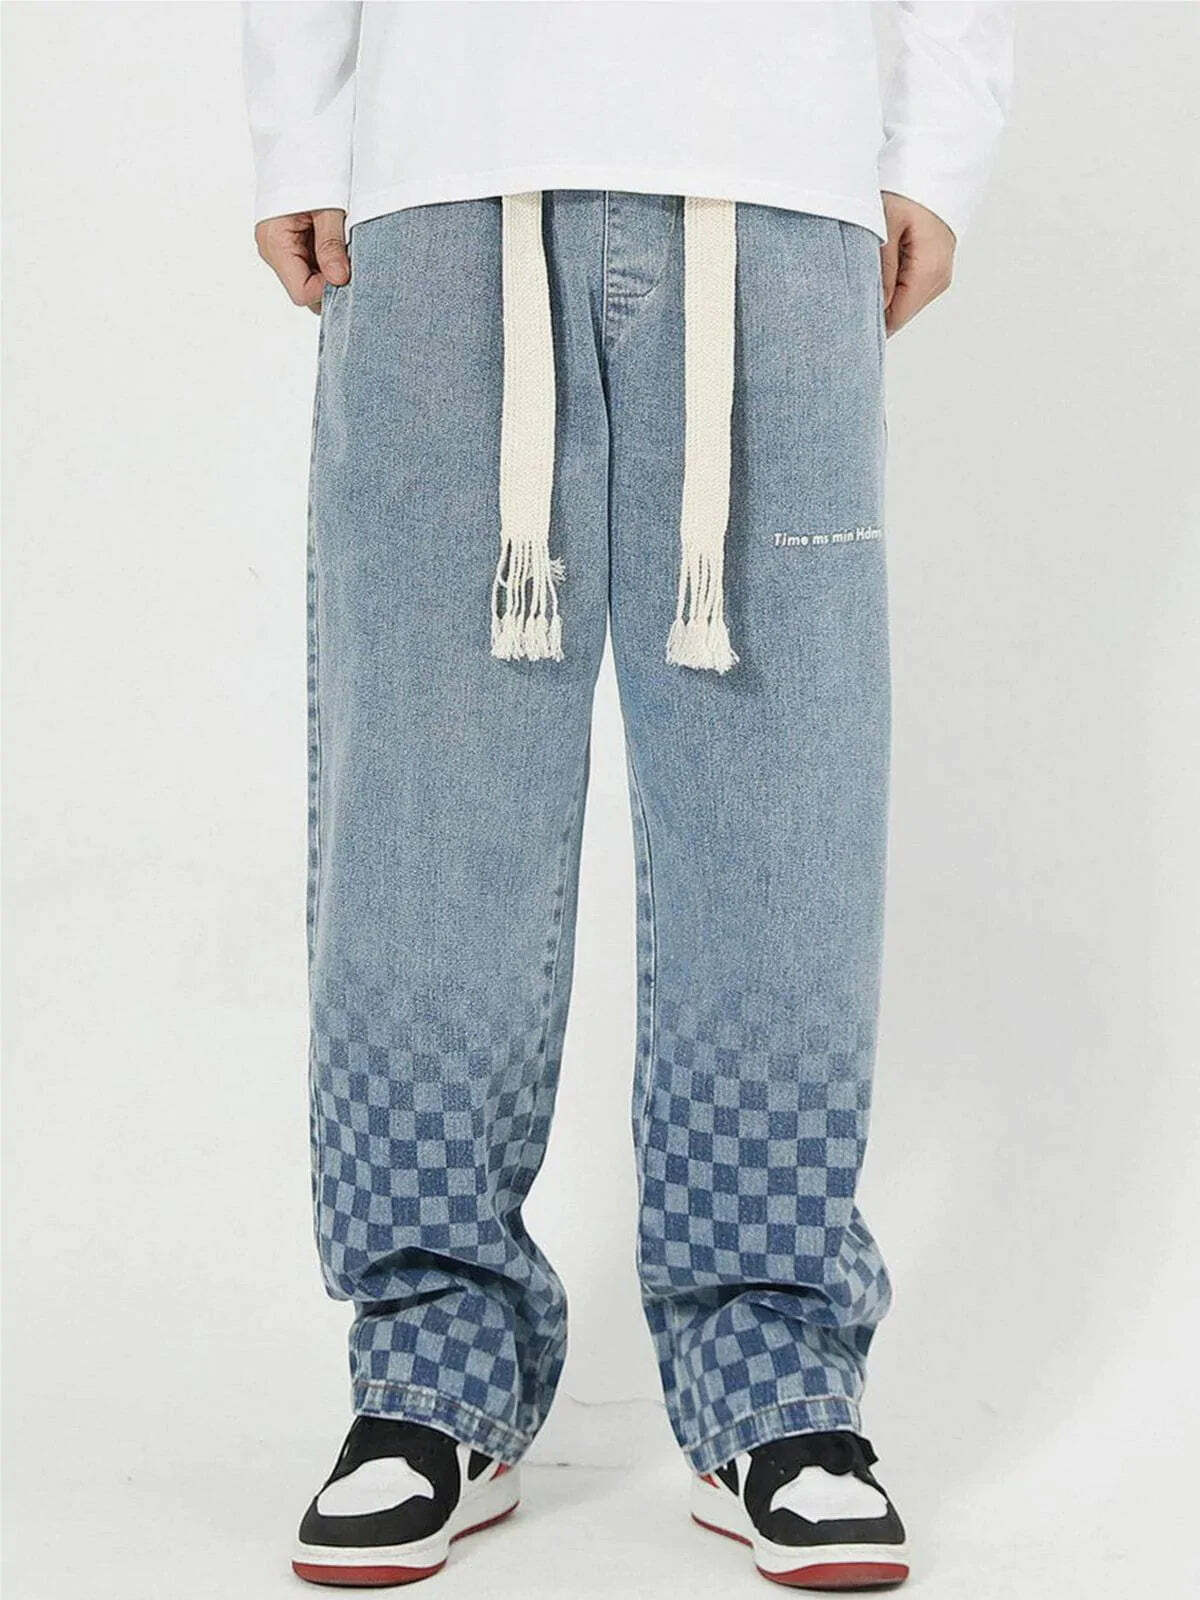 retro checkerboard print jeans edgy & vibrant streetwear 4224